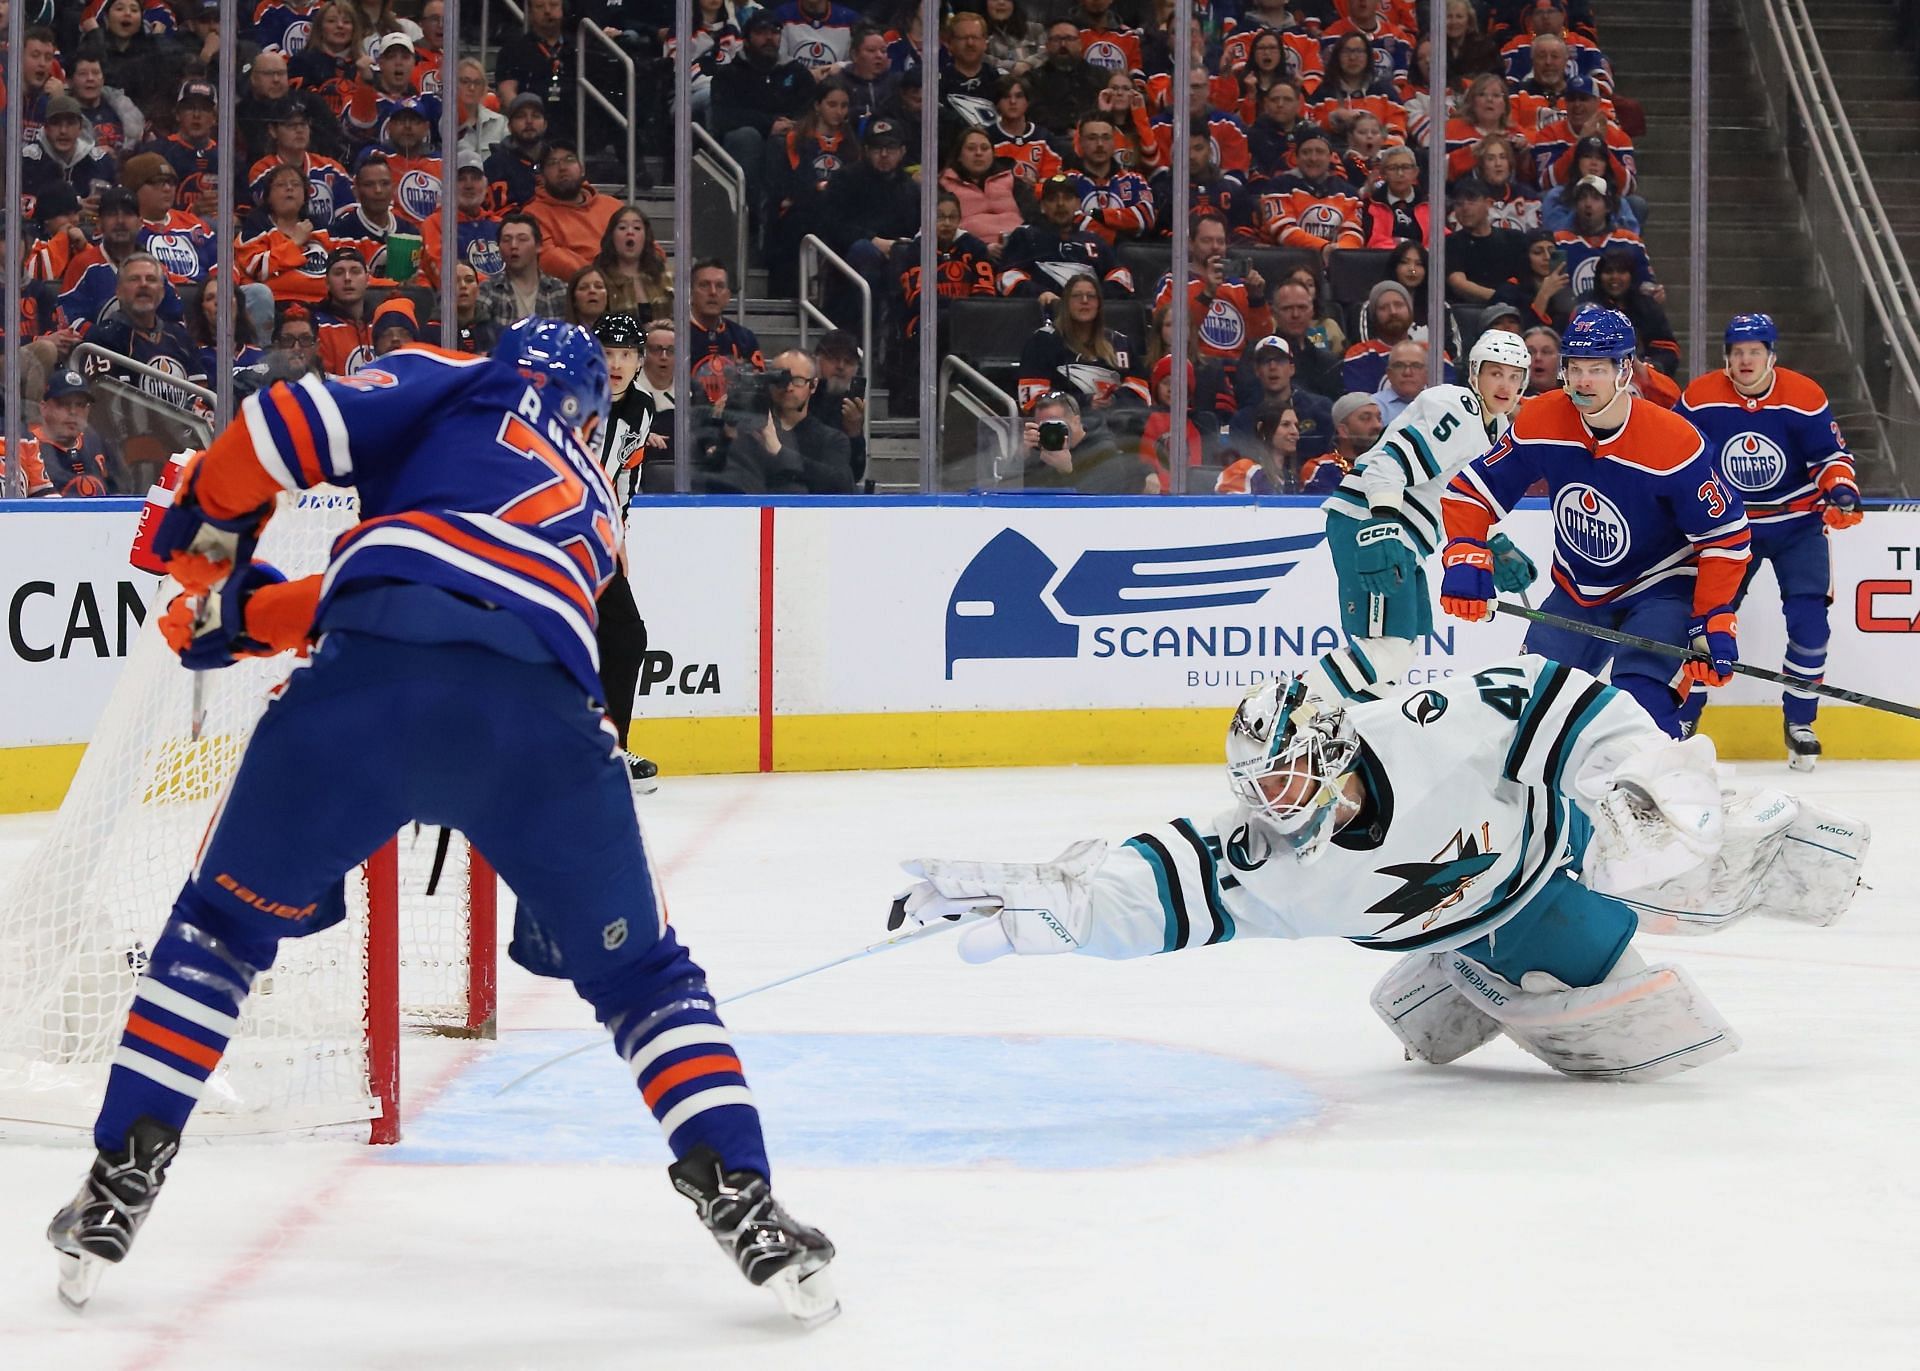 Edmonton Oilers vs. San Jose Sharks Live streaming options, how and